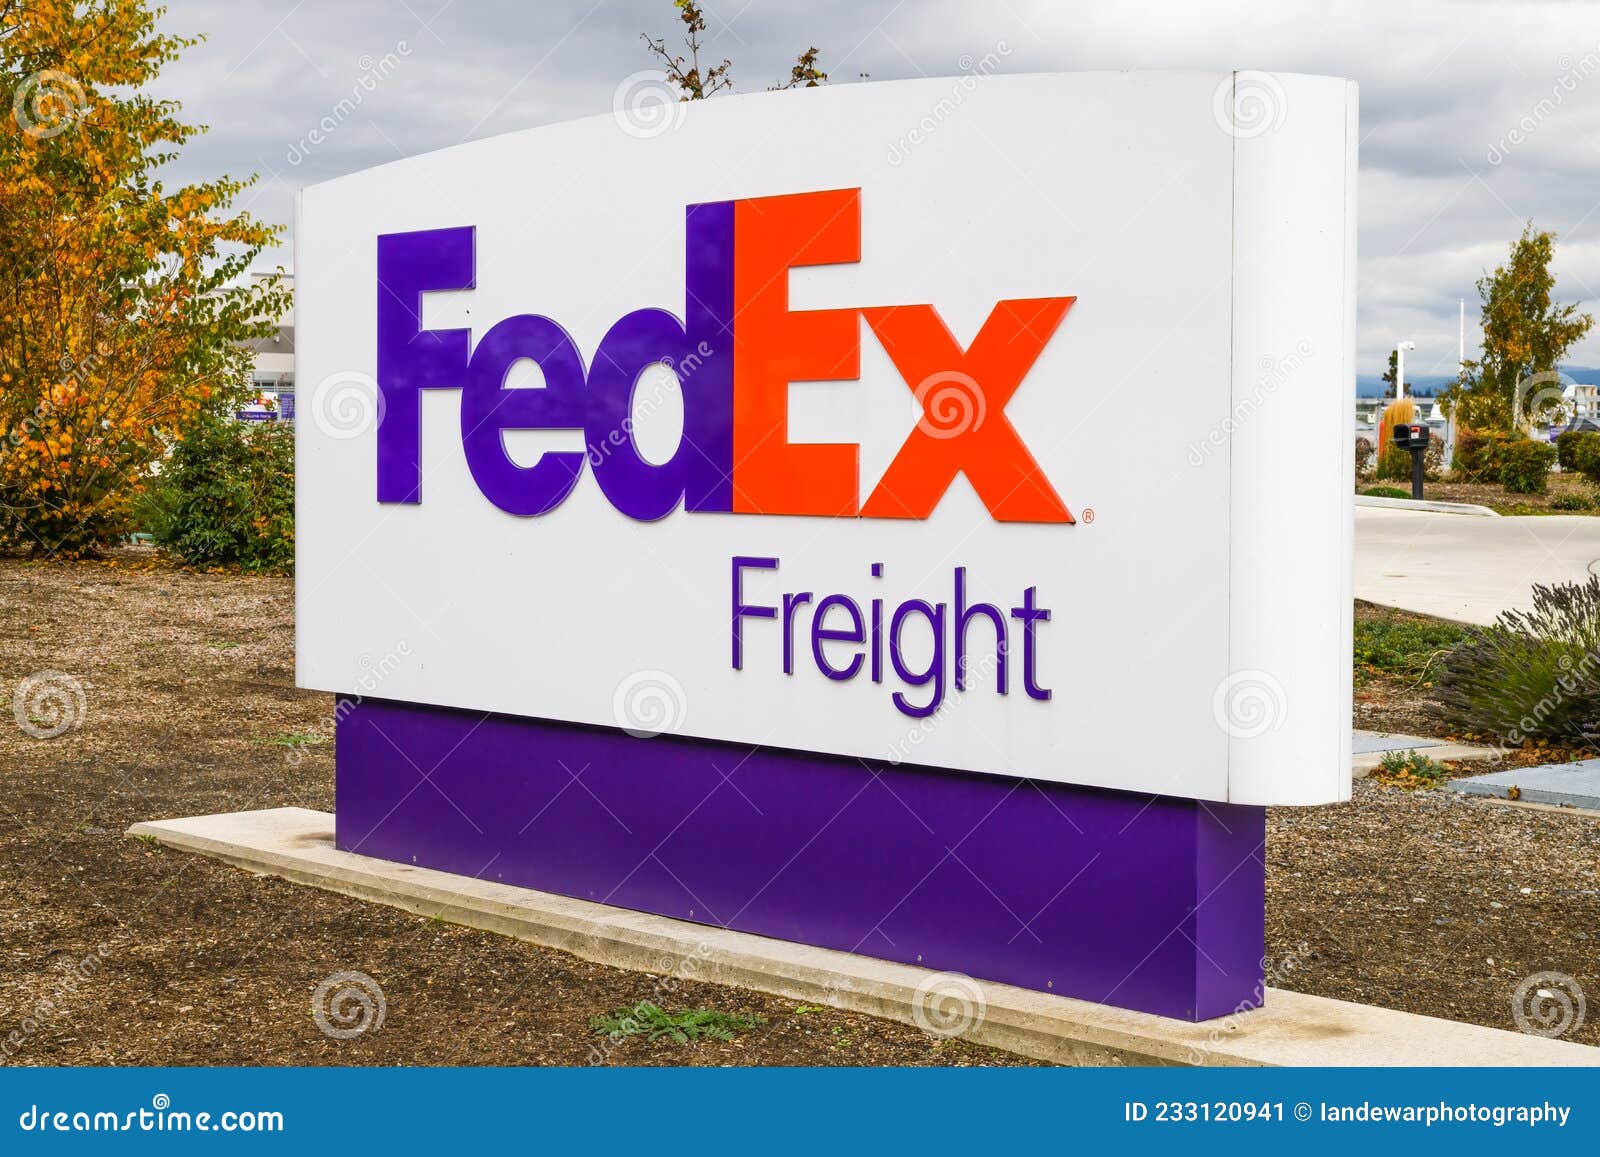 FedEx Freight Pedestal Sign at Their Everett Washington Location ...